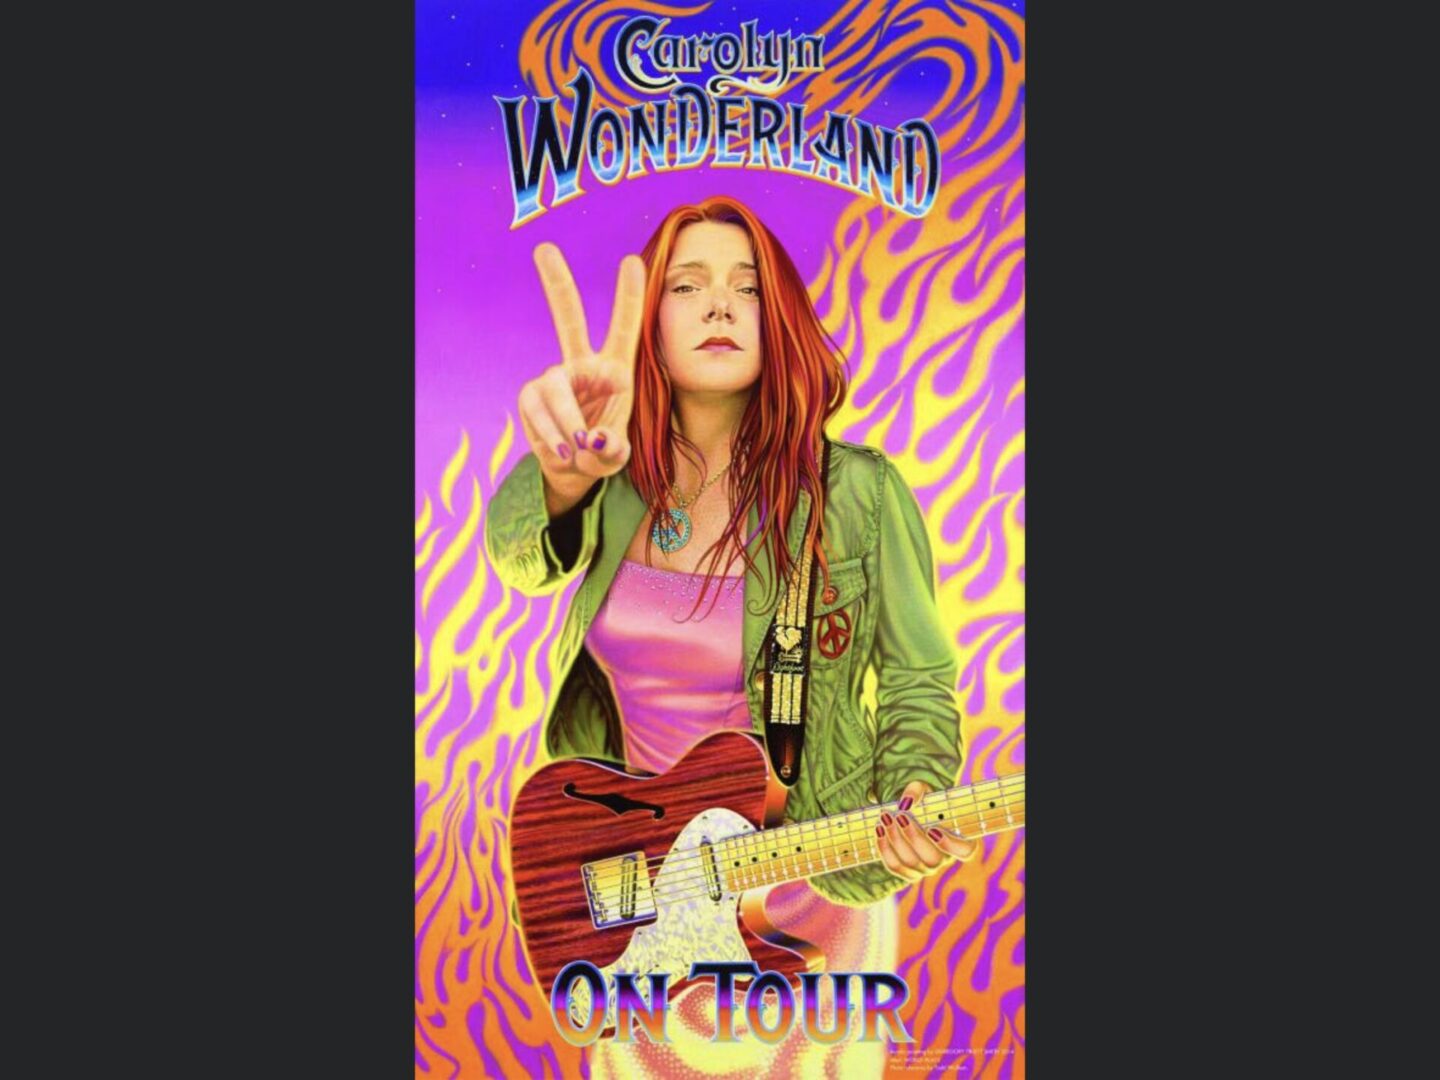 Poster of Singer/ Musician Carolyn Wonderland on tour